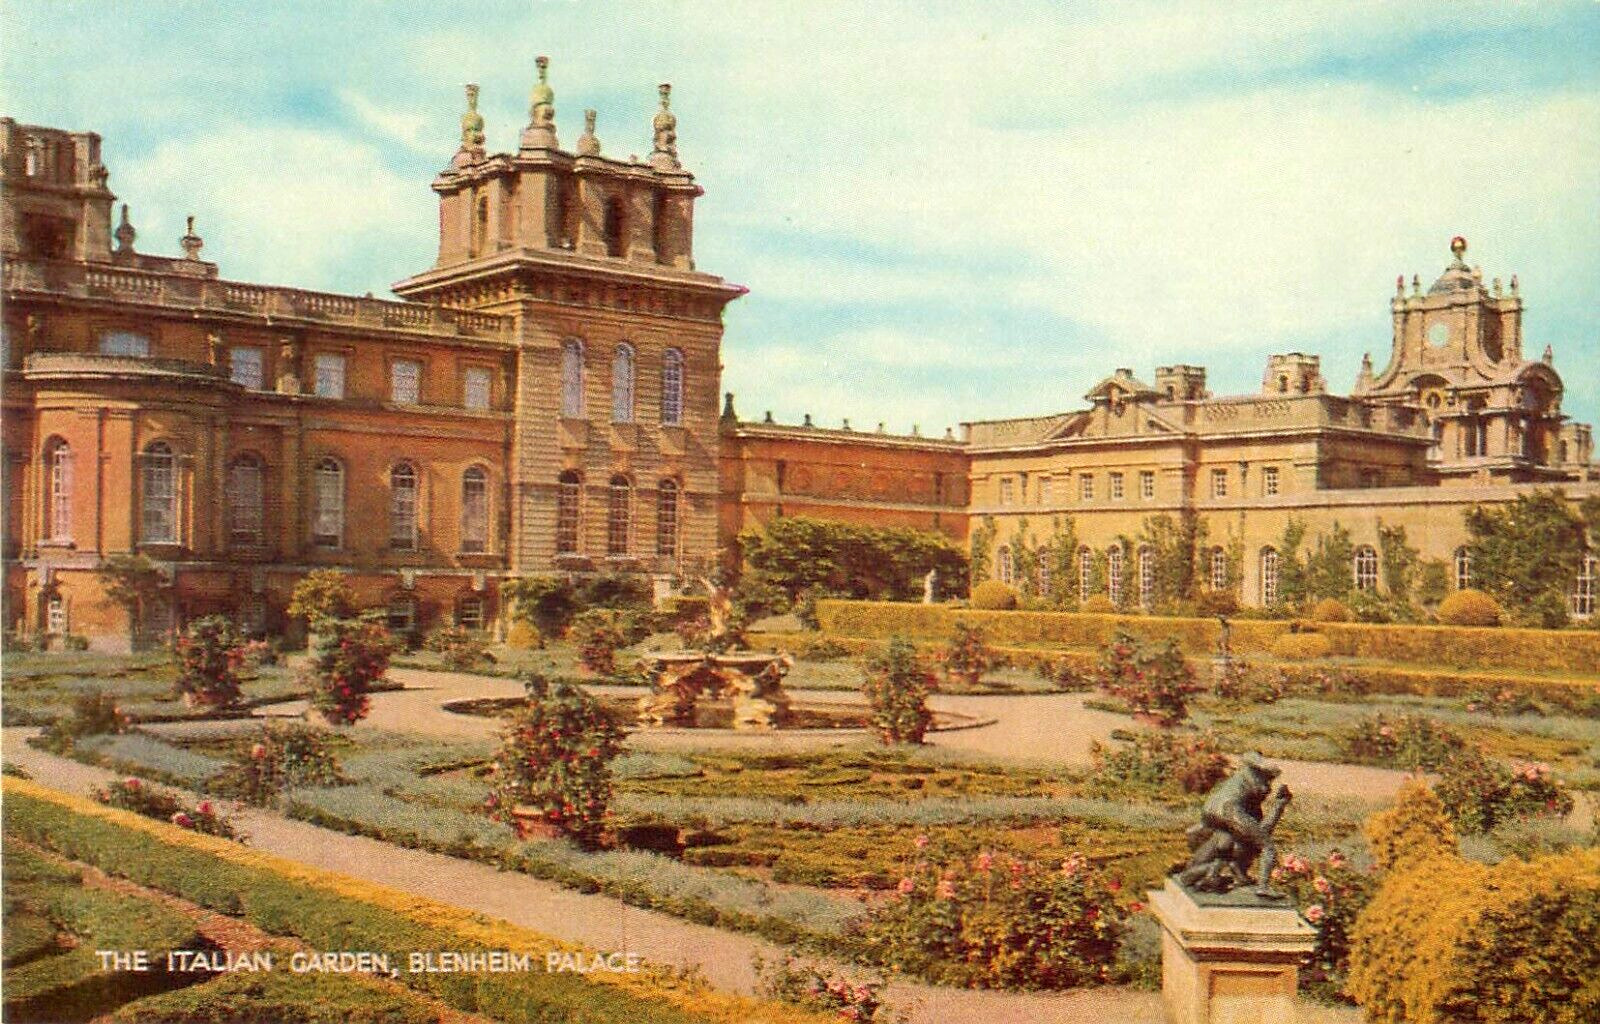 The Italian Garden, Blenheim Palace-Vintage Tourist Unposted NOS Postcard